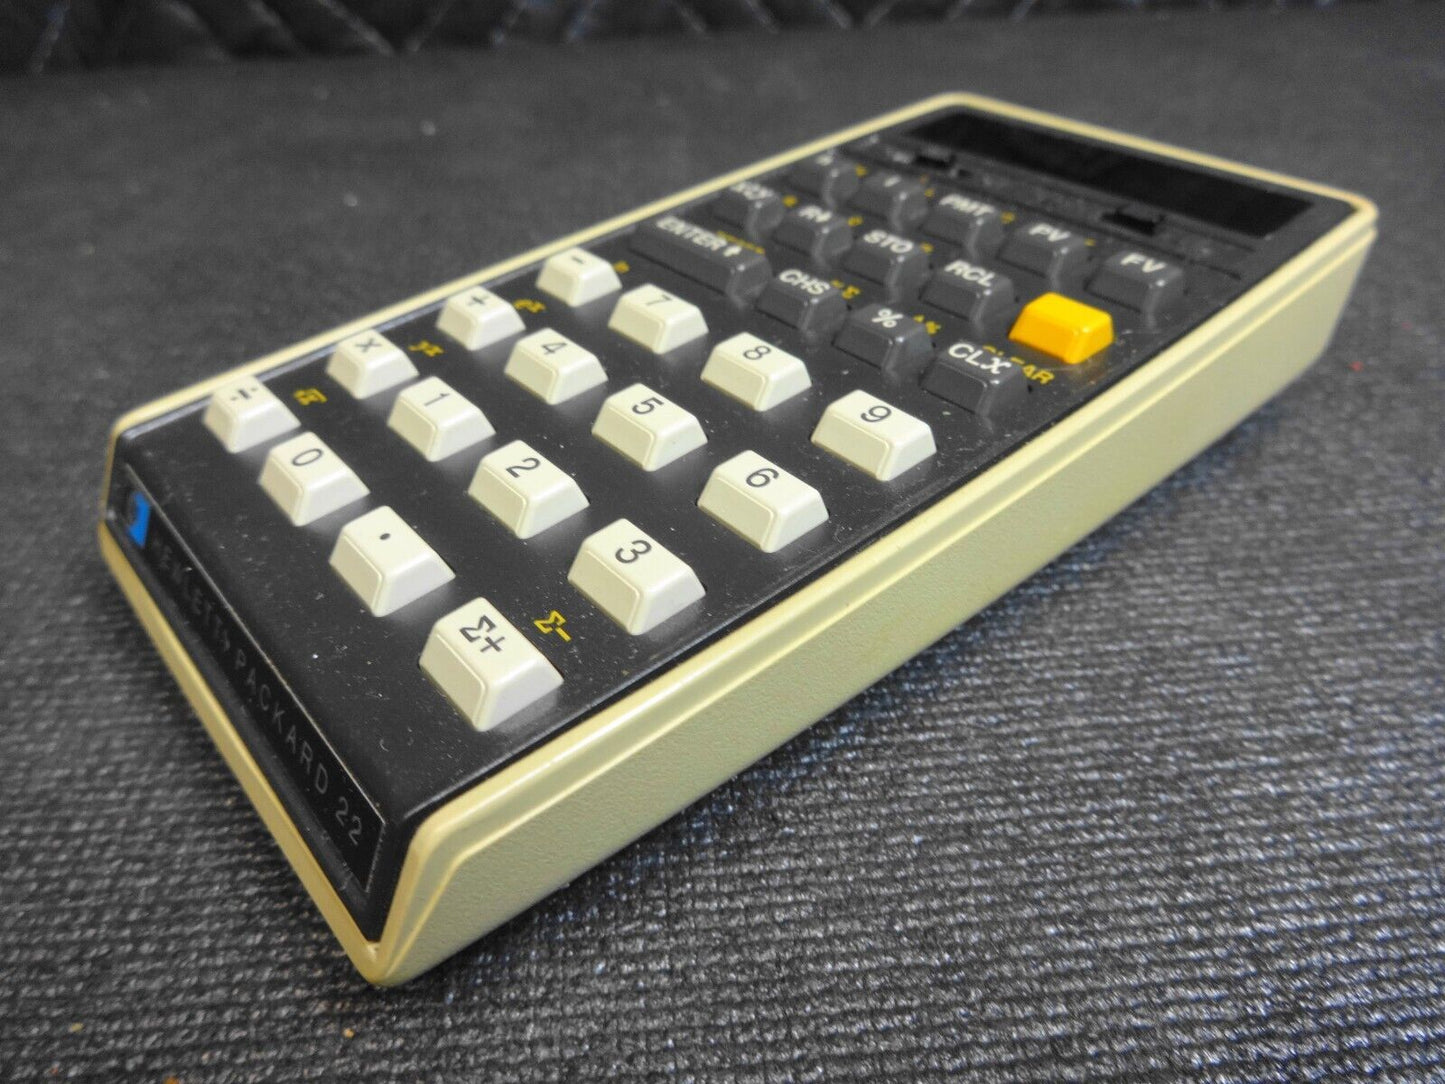 Vintage 1978 Hewlett Packard HP 22 Financial Calculator w/ Case - Powers On